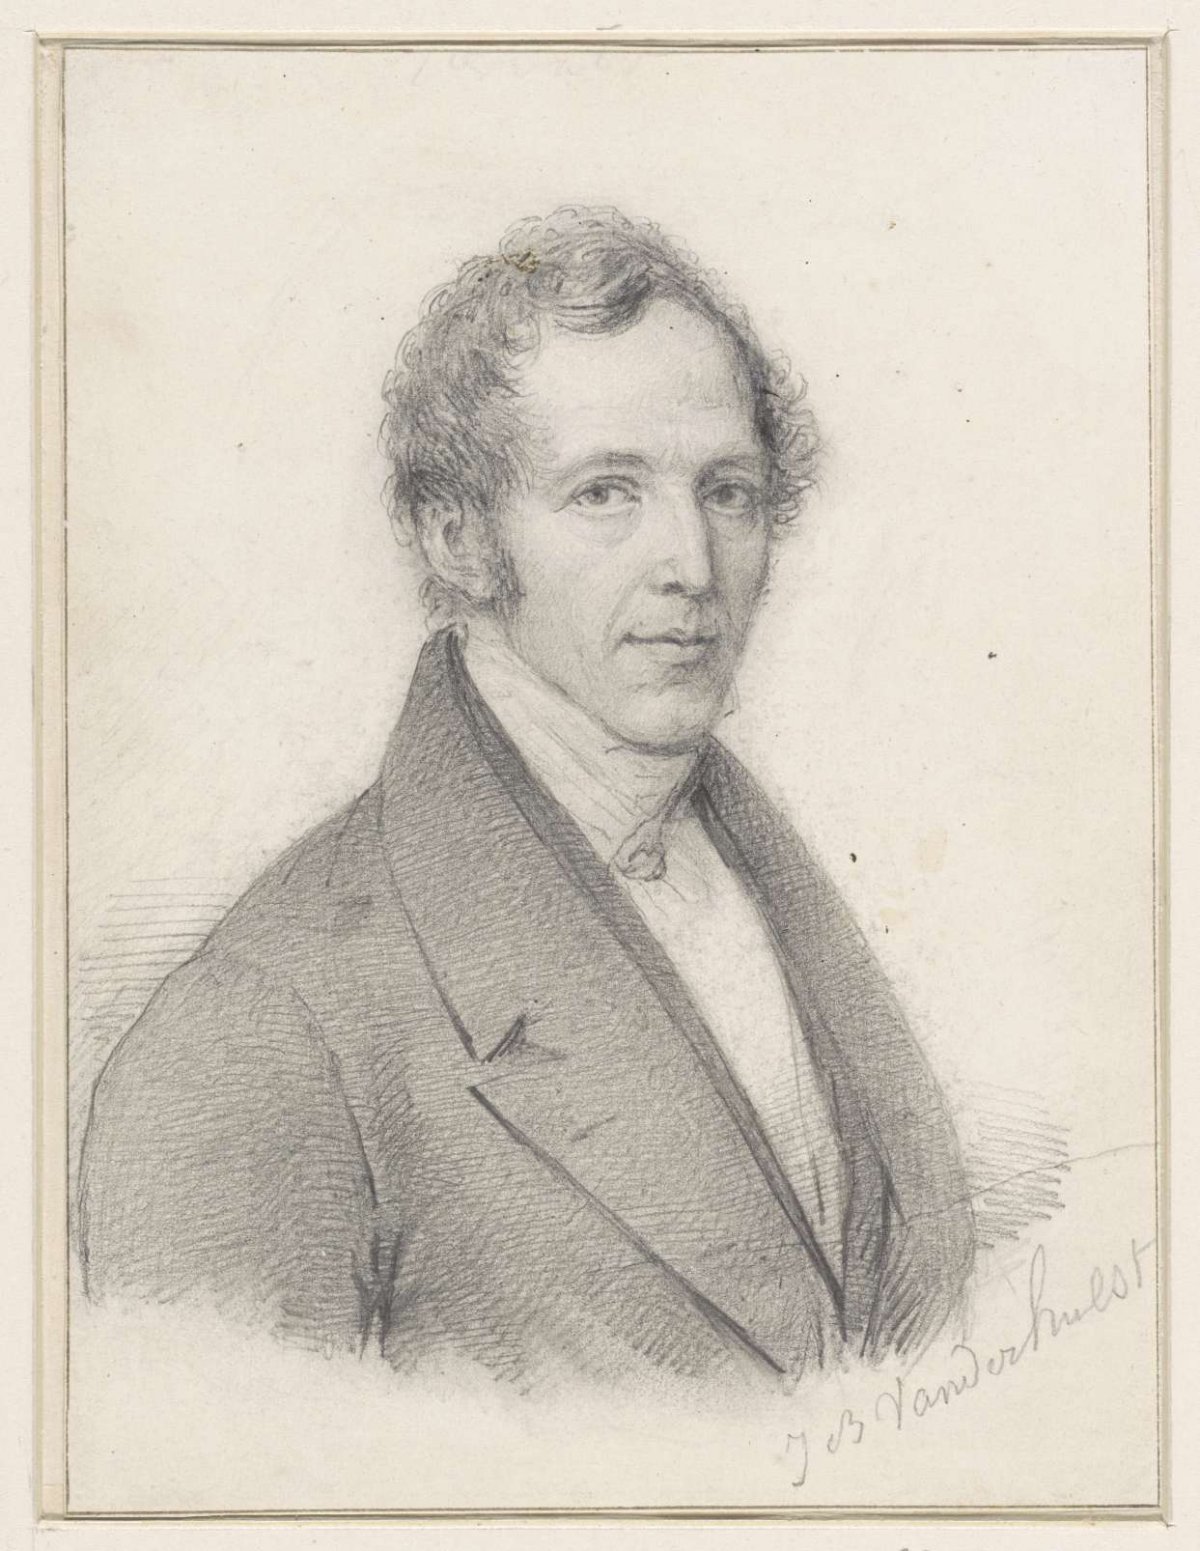 Self-portrait of Jean-Baptiste Van der Hulst, Jean-Baptiste Van der Hulst, 1840 - 1842